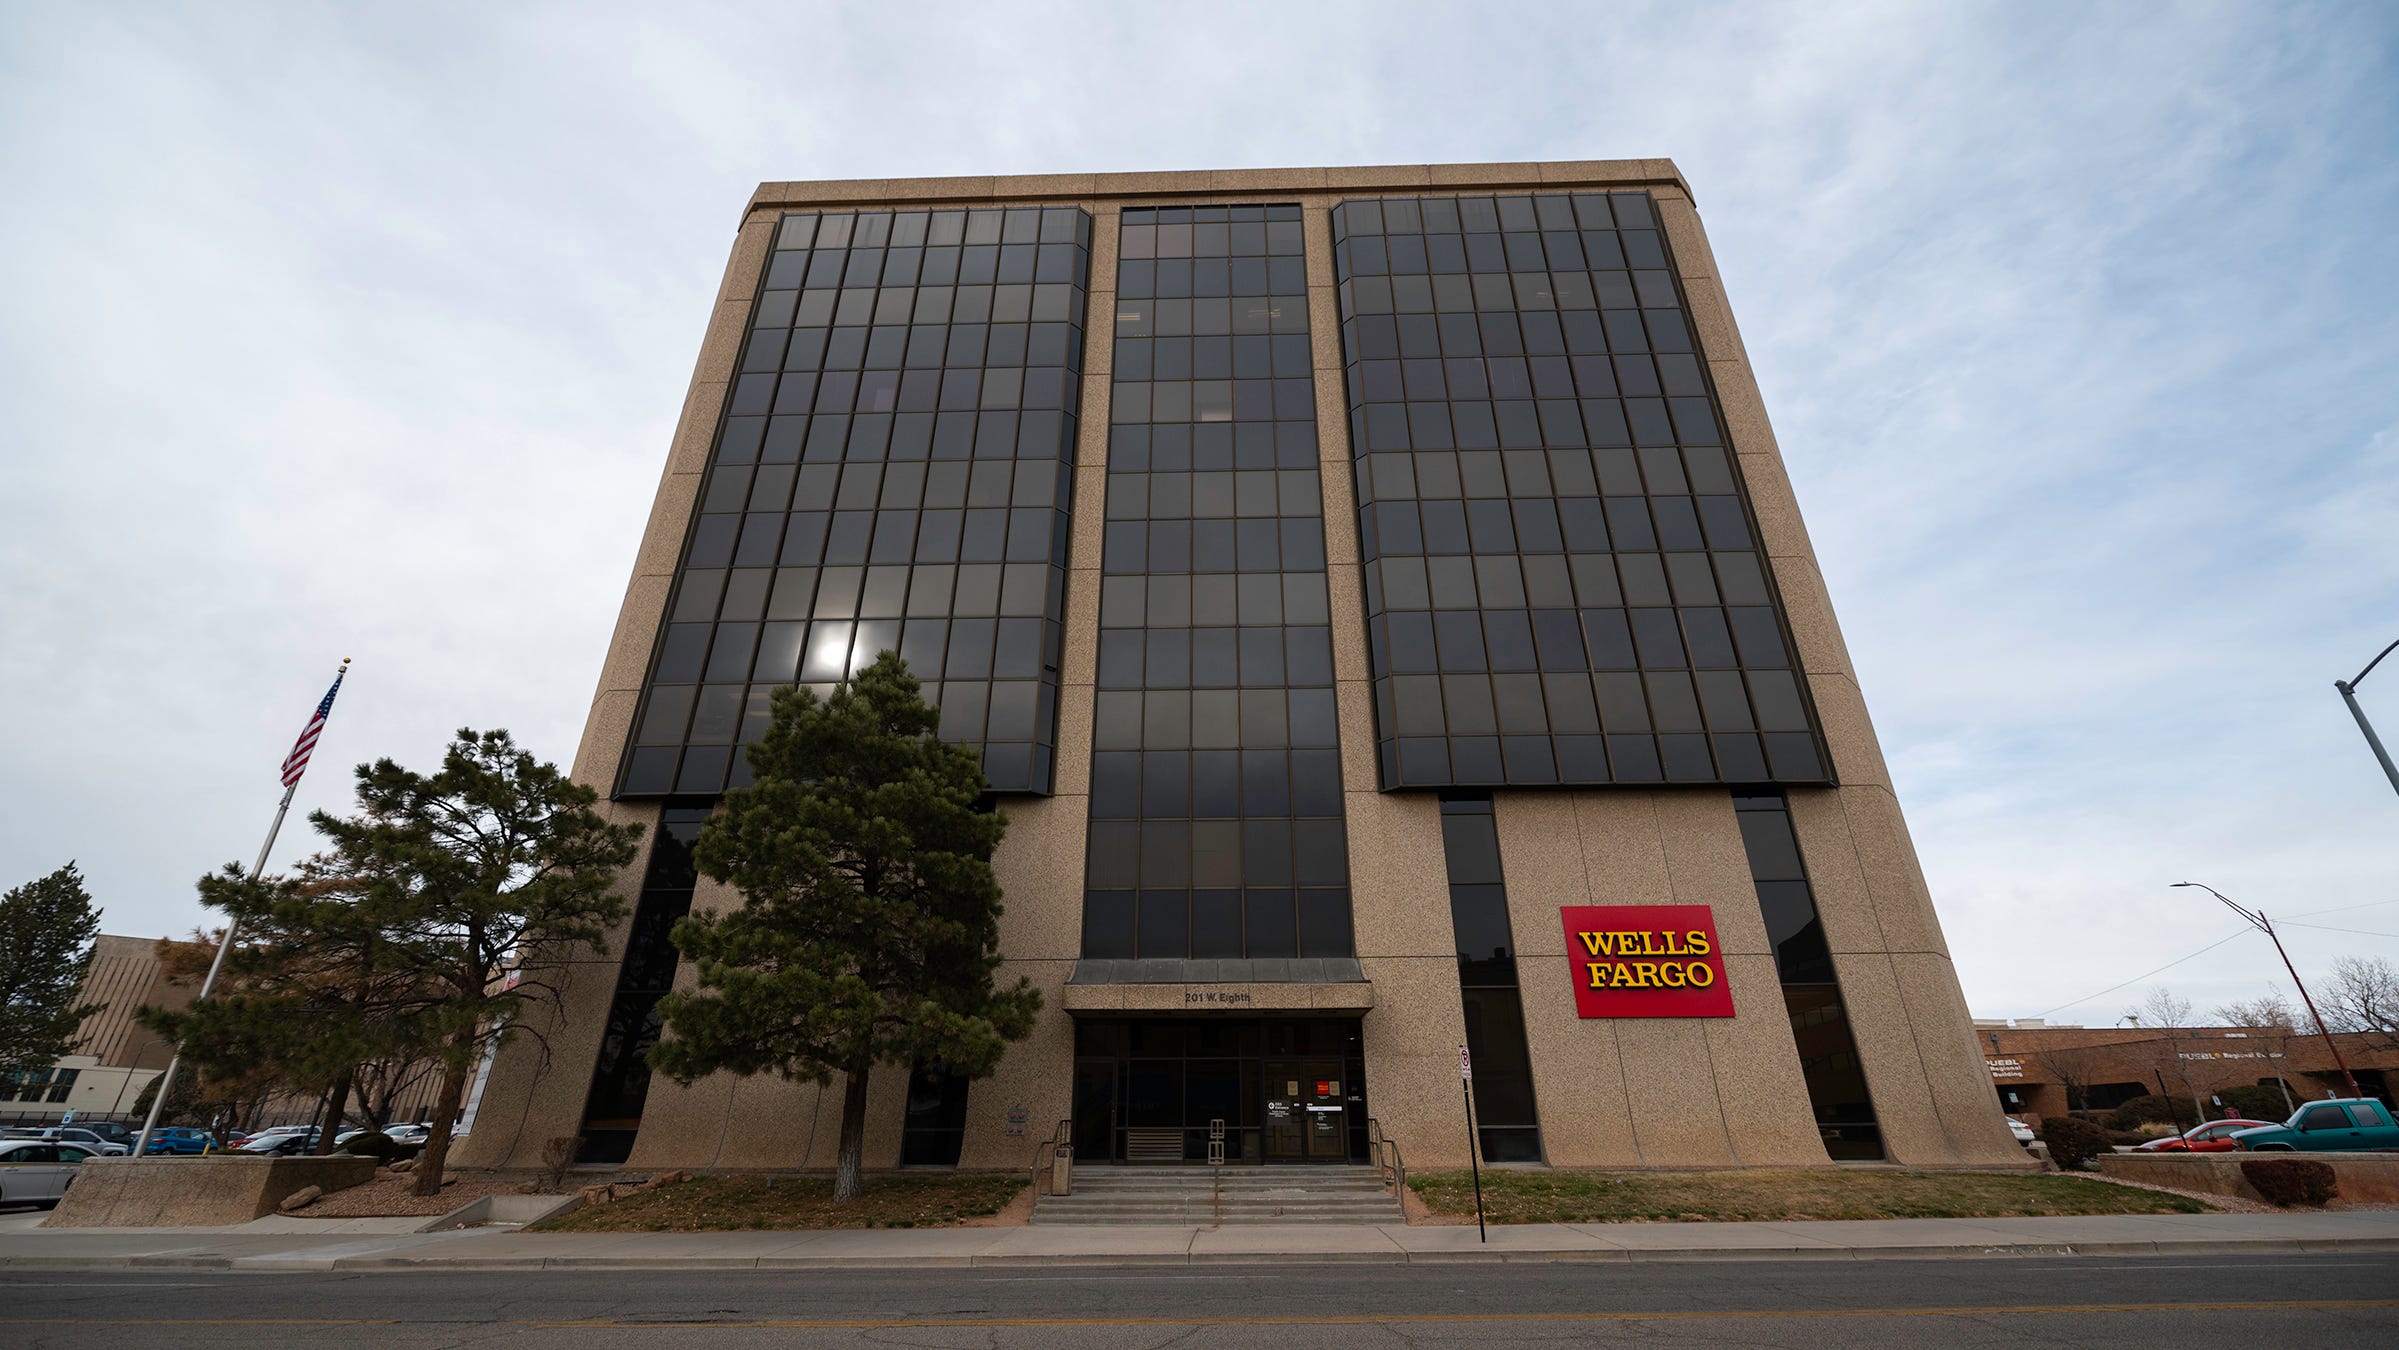 'A great opportunity': Pueblo city, county resume negotiations on Wells Fargo building